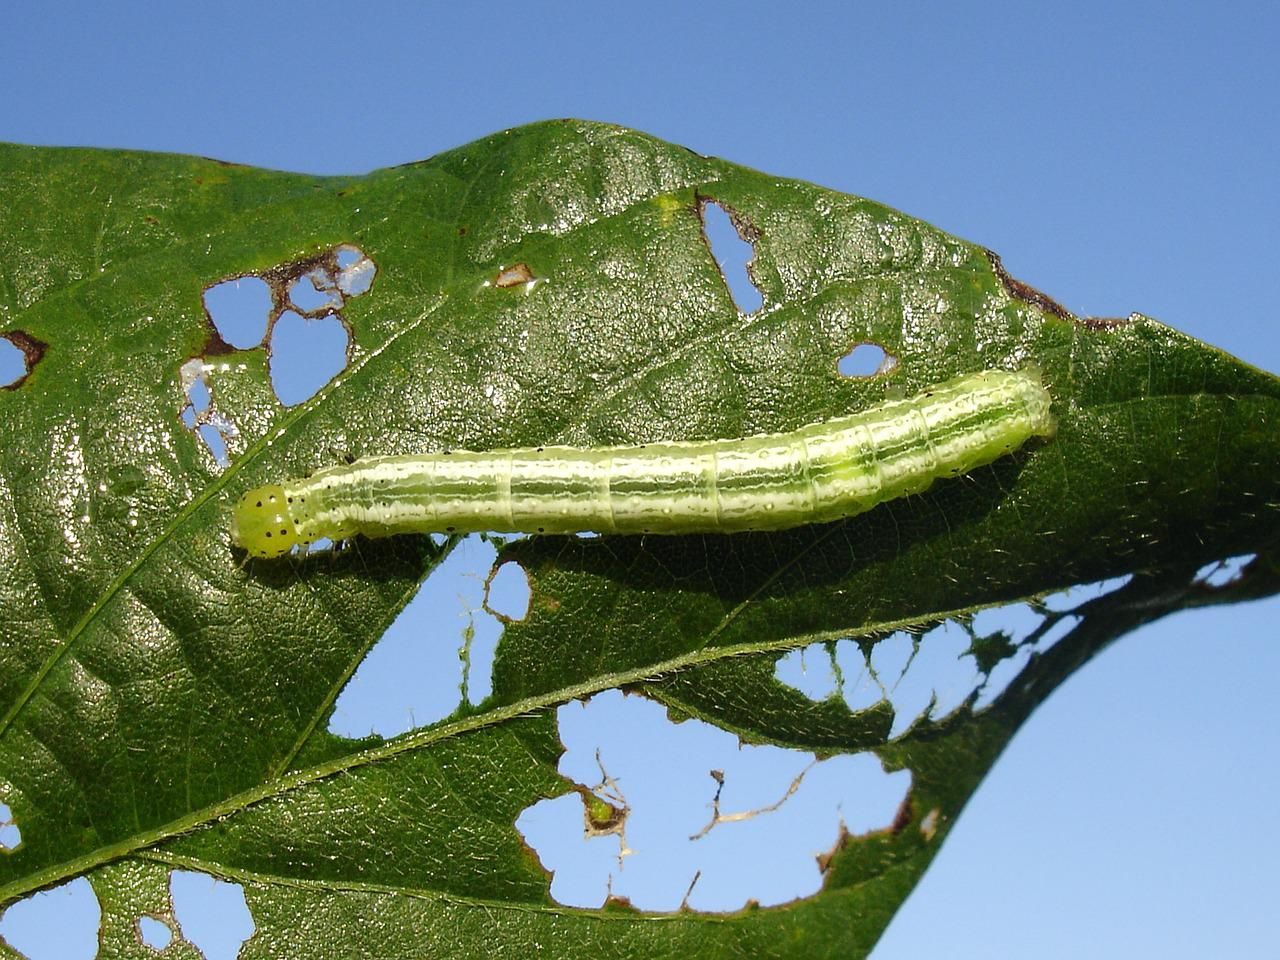 Caterpillar eating a leaf